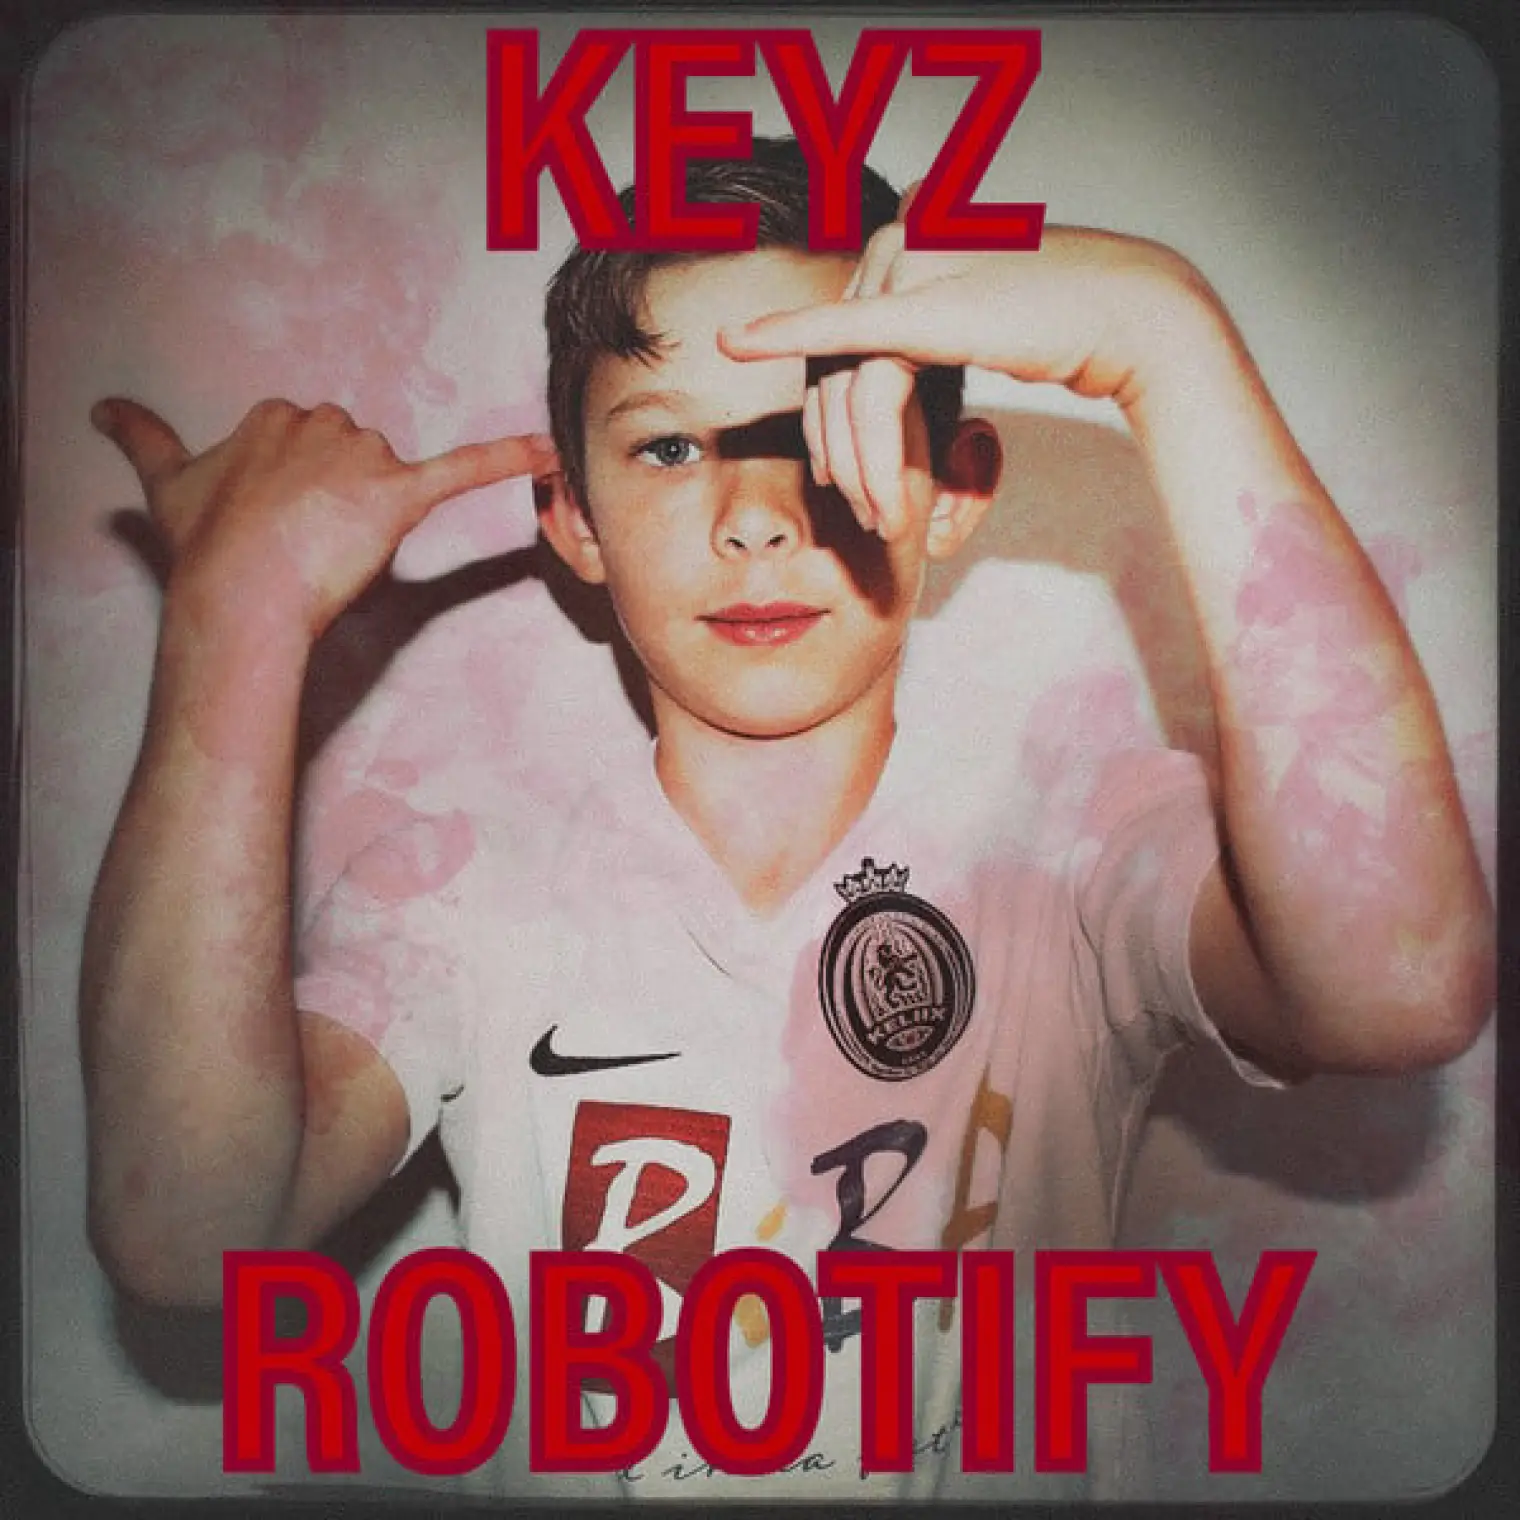 Robotify -  Keyz 